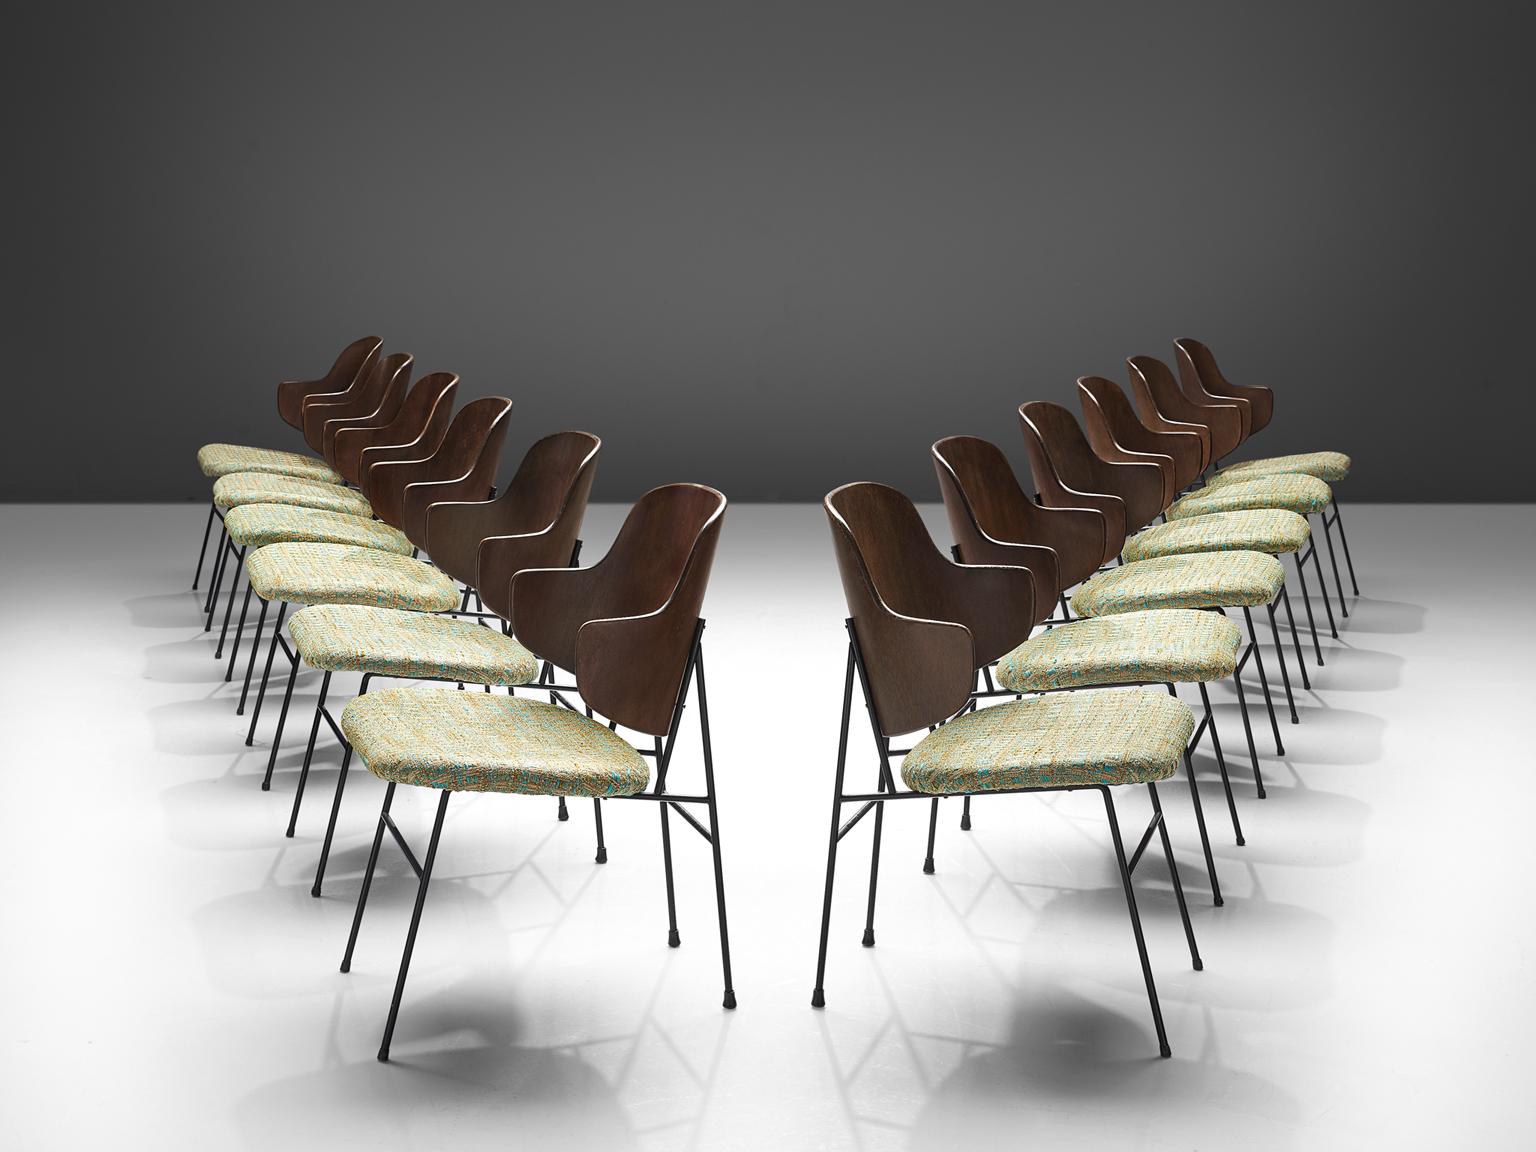 Steel Ib Kofod-Larsen Extremely Large Set of Penguin Chairs